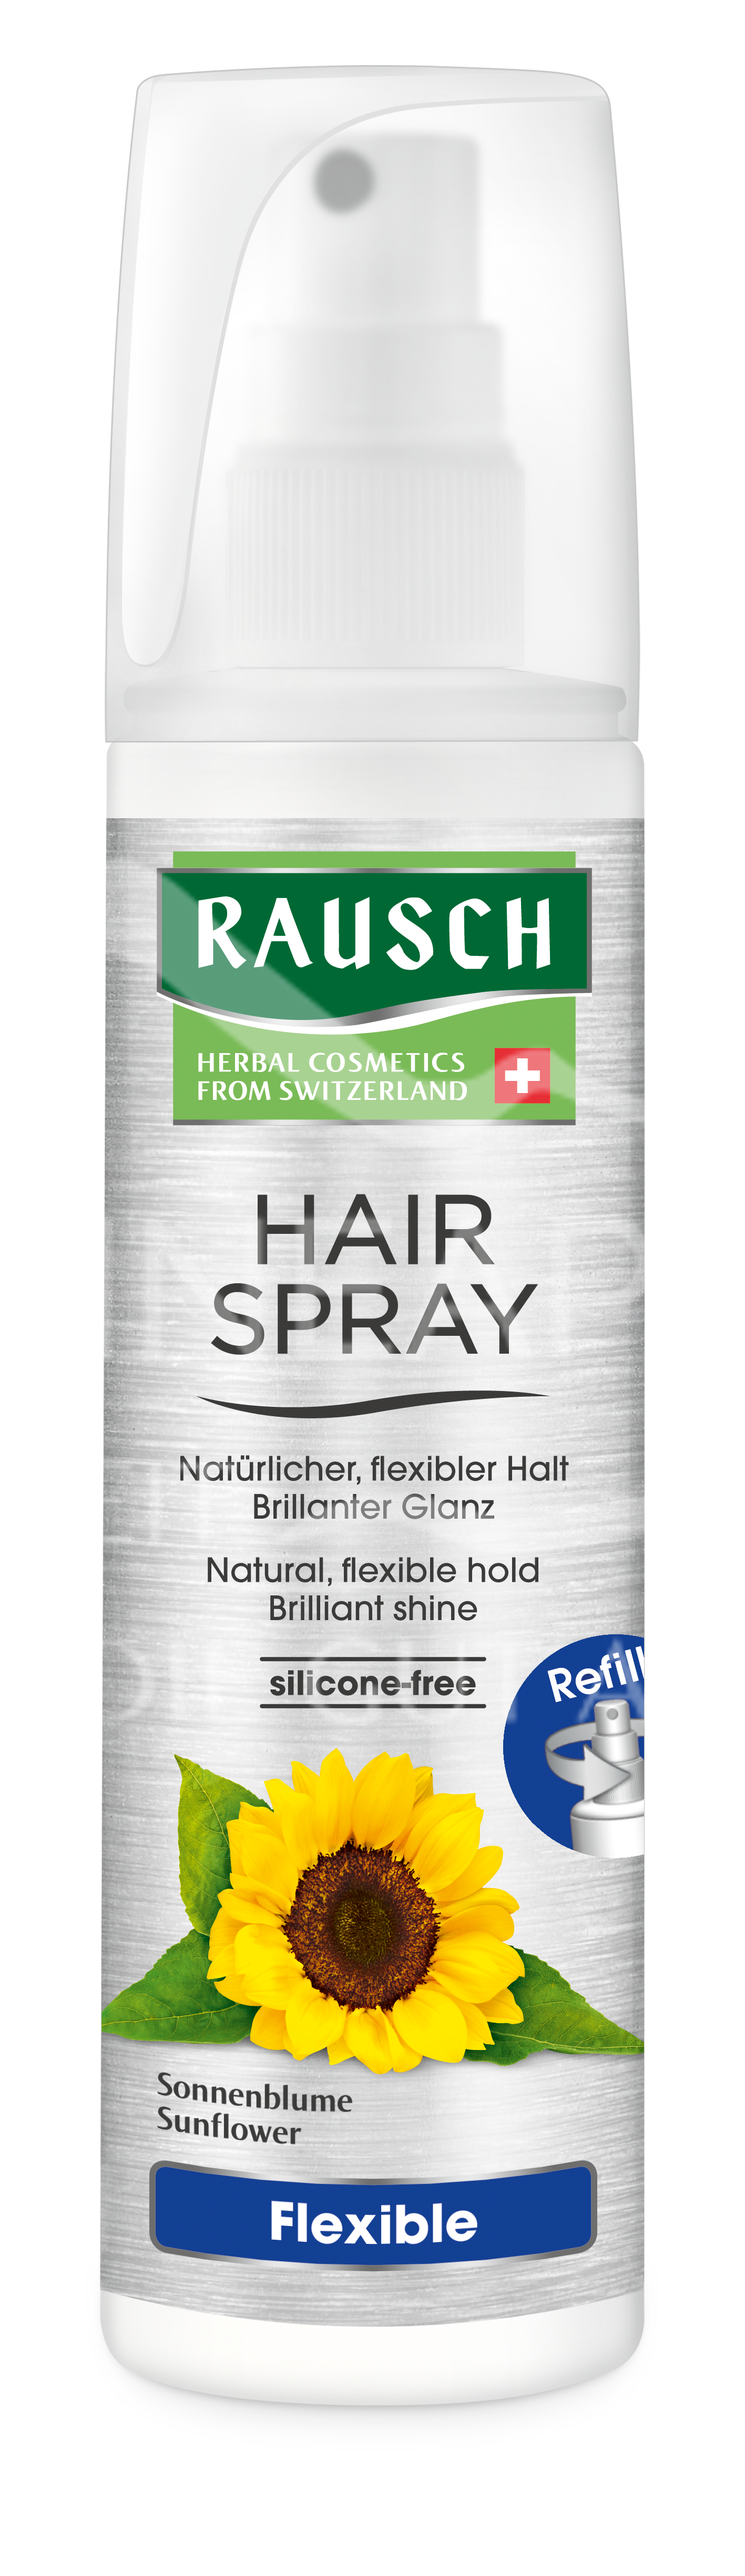 RAUSCH Hairspray Flexible Non-Aerosol